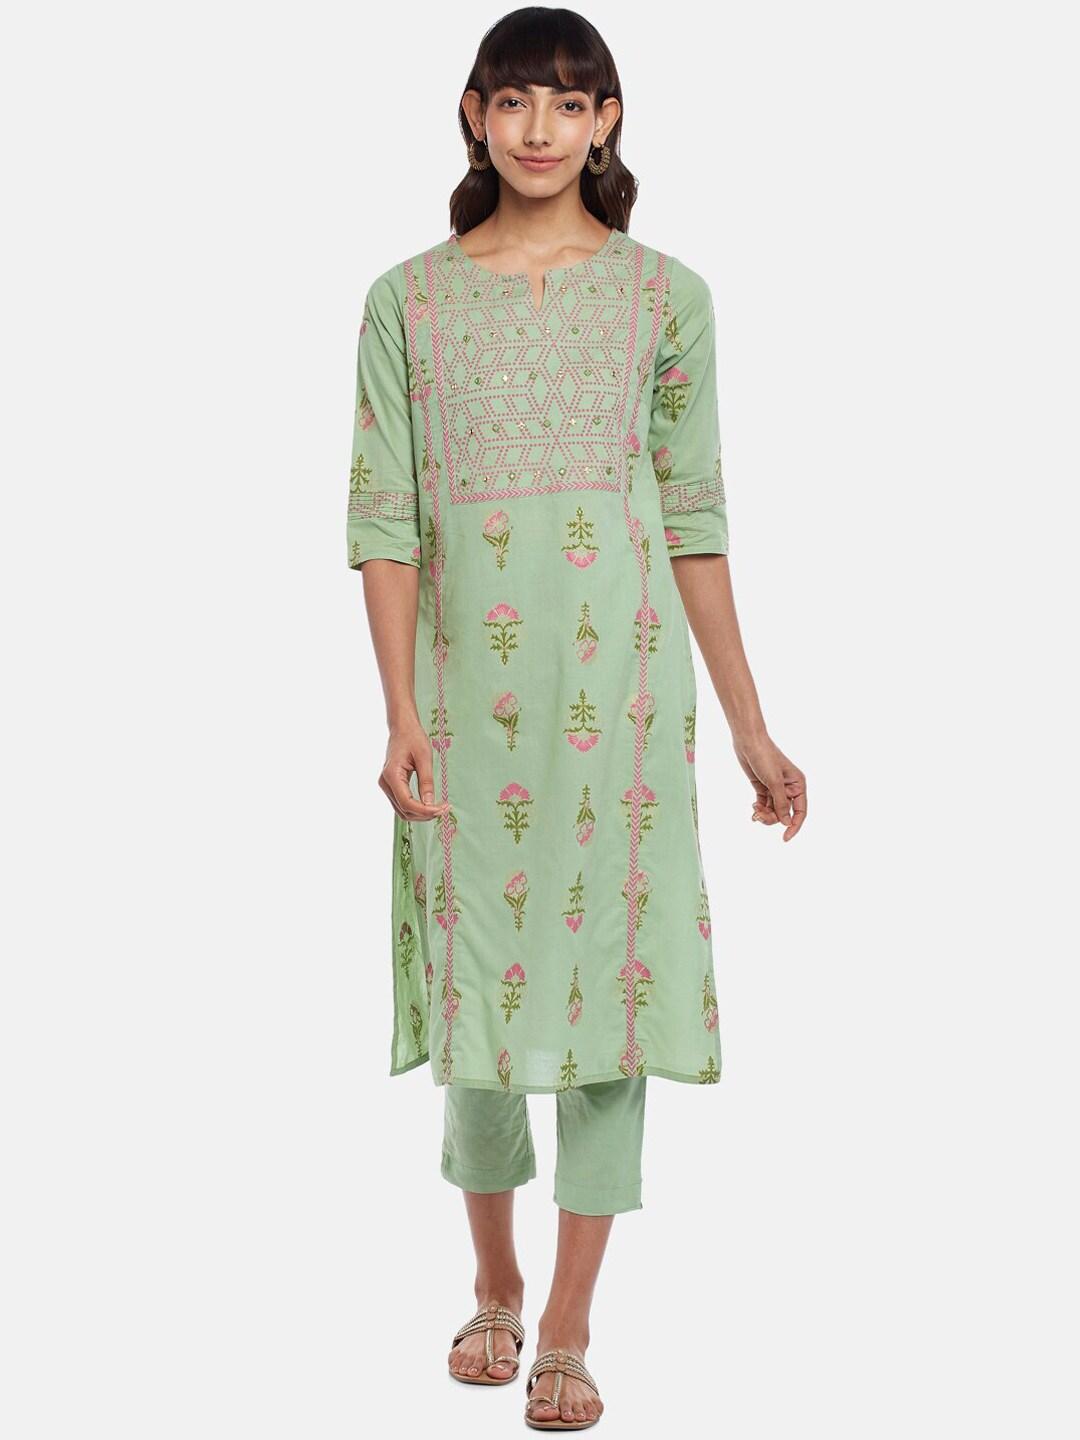 rangmanch-by-pantaloons-women-green-ethnic-motifs-panelled-pure-cotton-kurta-set